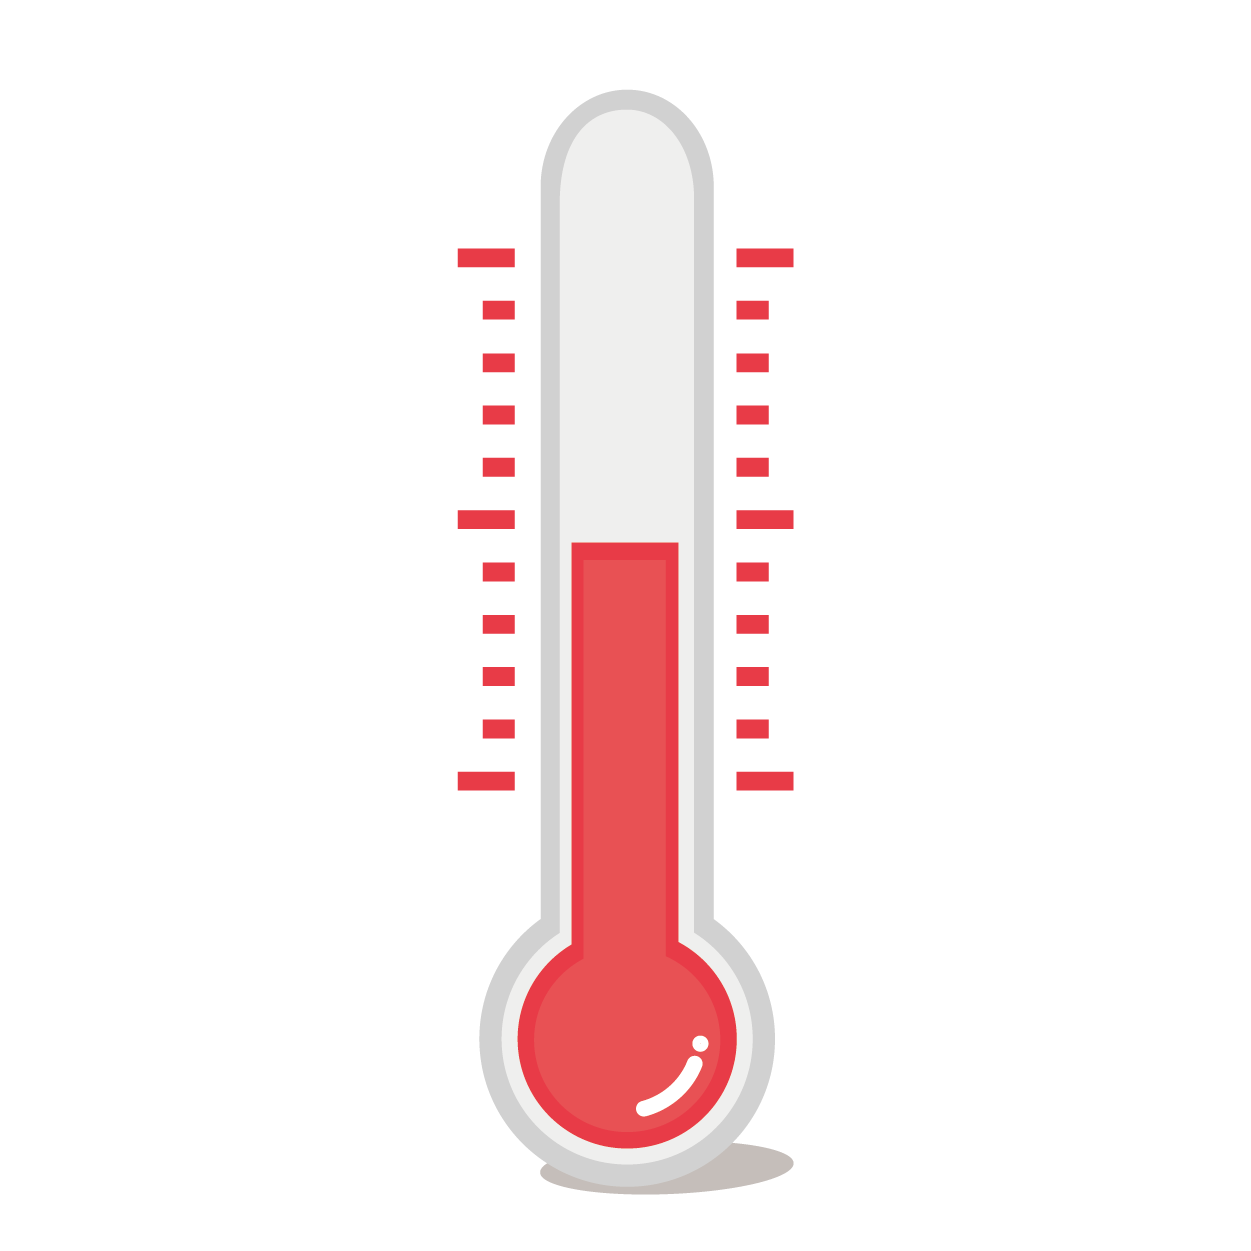 Heating Illustration